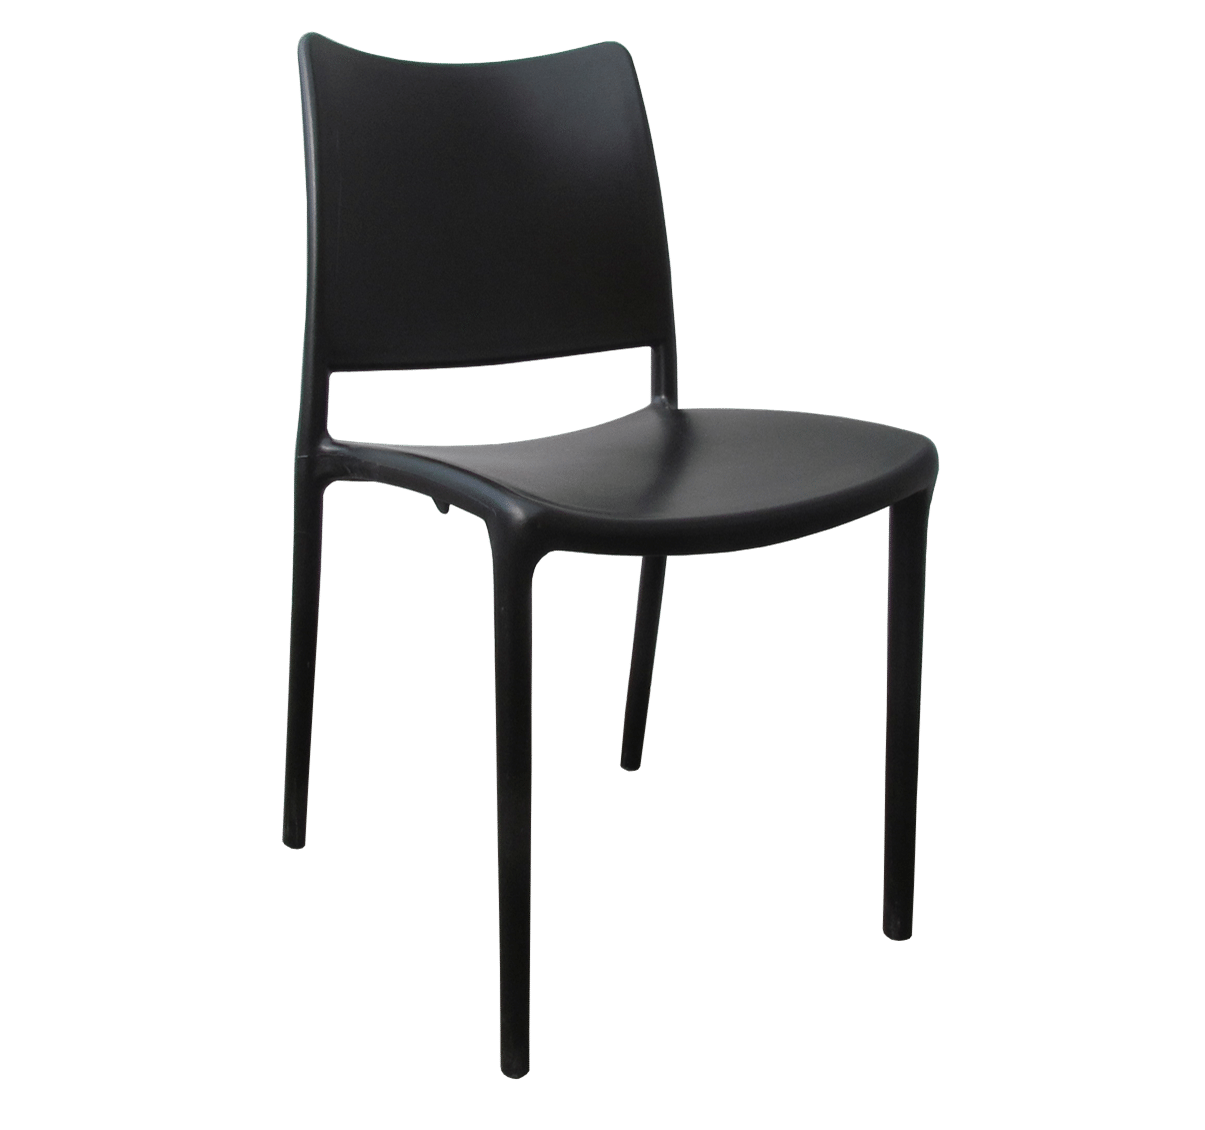 Swoon outdoor chair